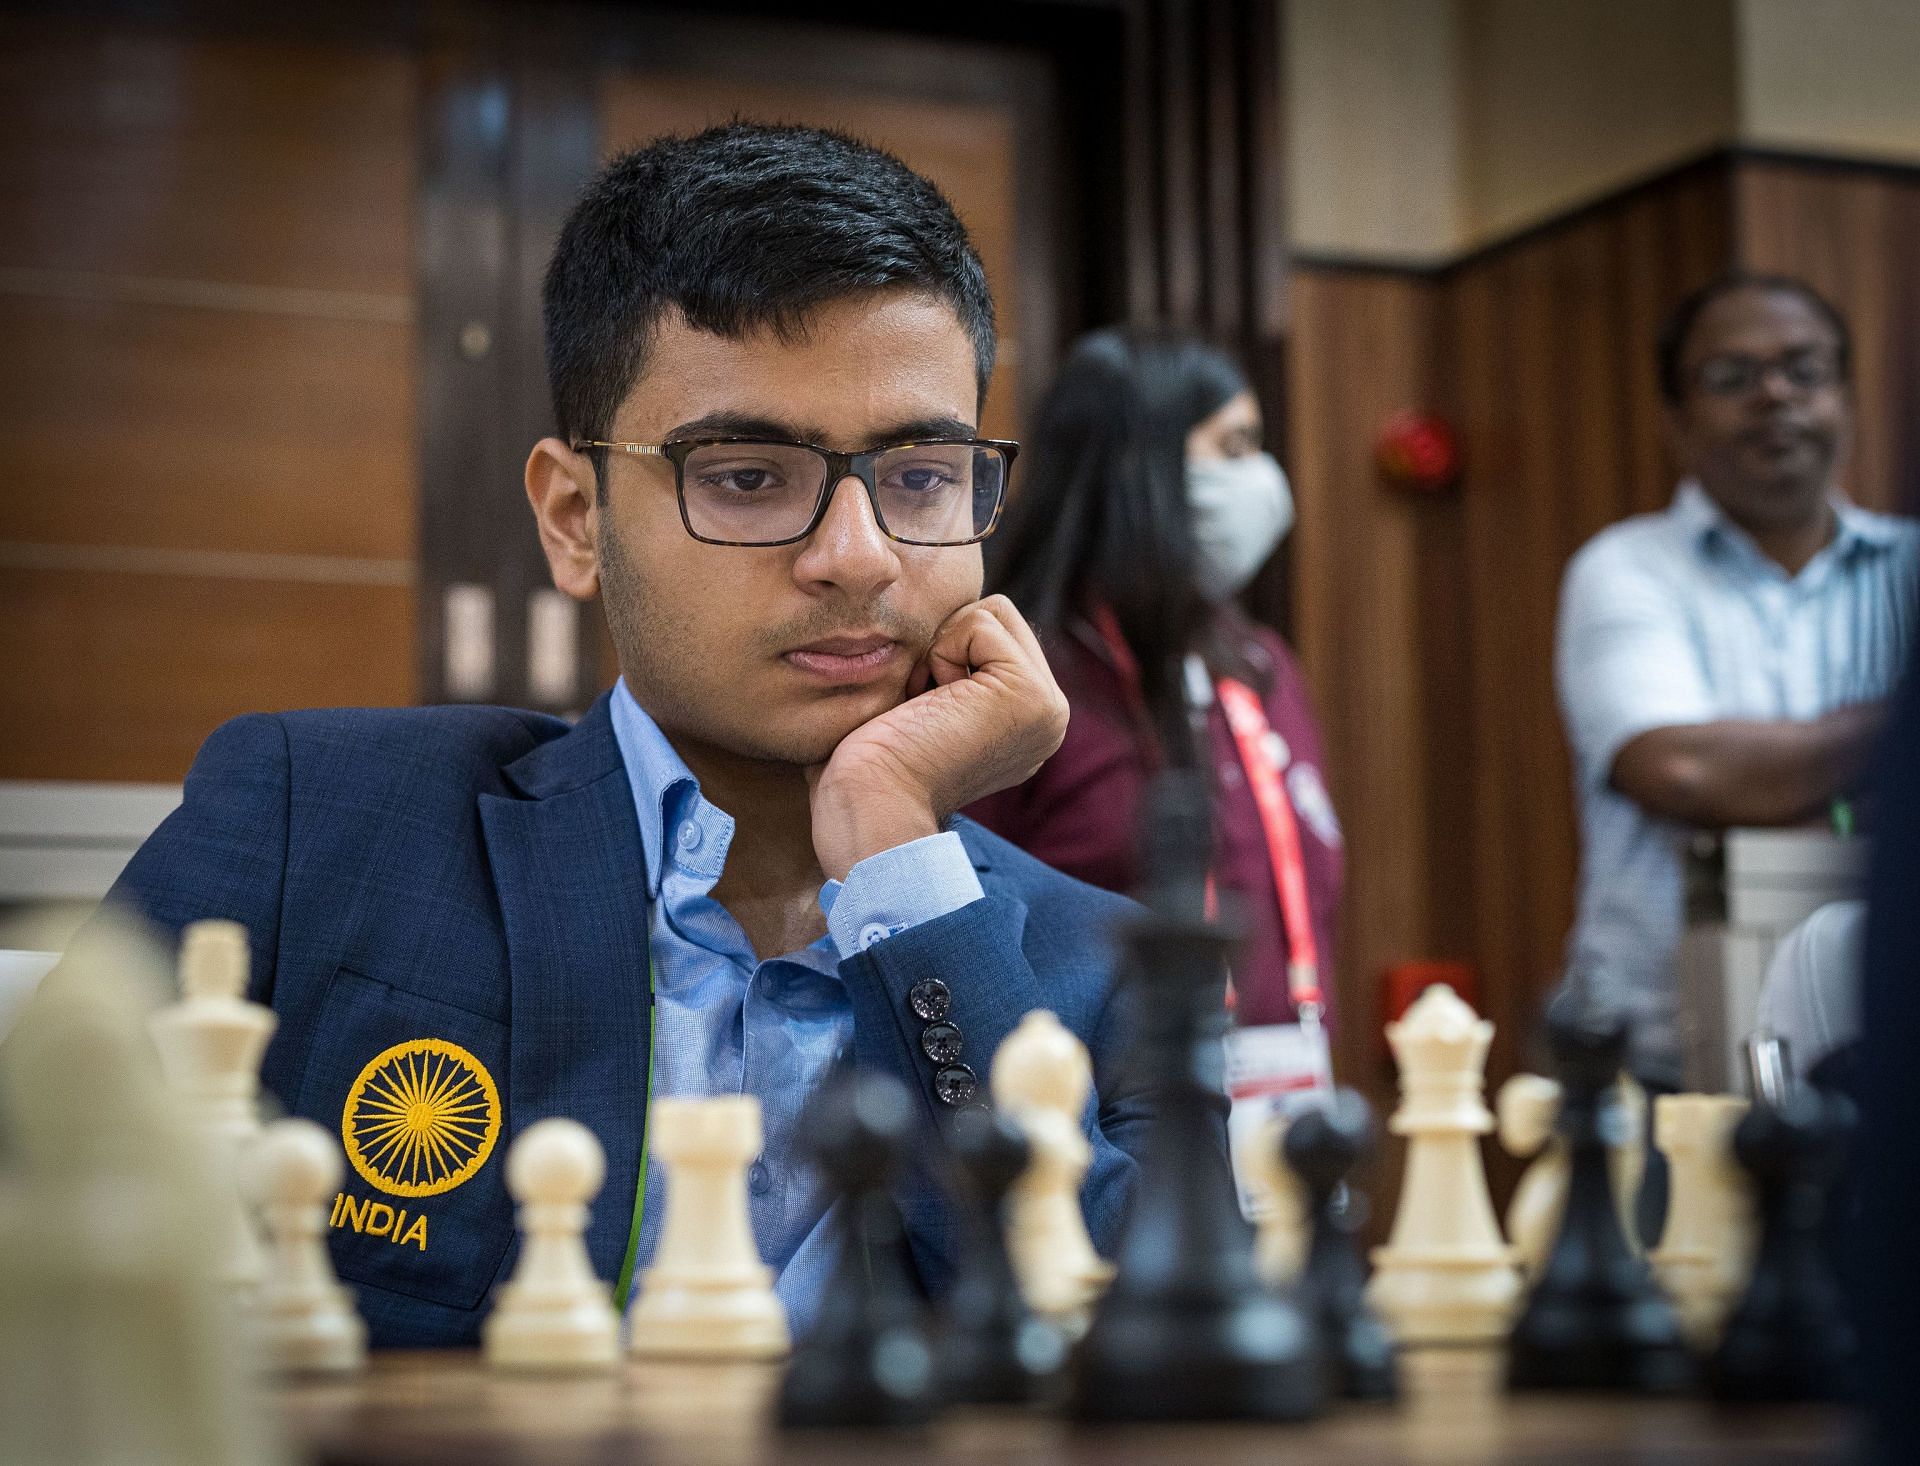 Nagpur-based GM Raunak Sadhwani upset higher-rated Leinier Perez Dominguez to help India B team beat top-seeded USA at the 44th Chess Olympiad in Chennai on Saturday. (FIDE/Lennart Ootes &amp; Stev Bonhage)